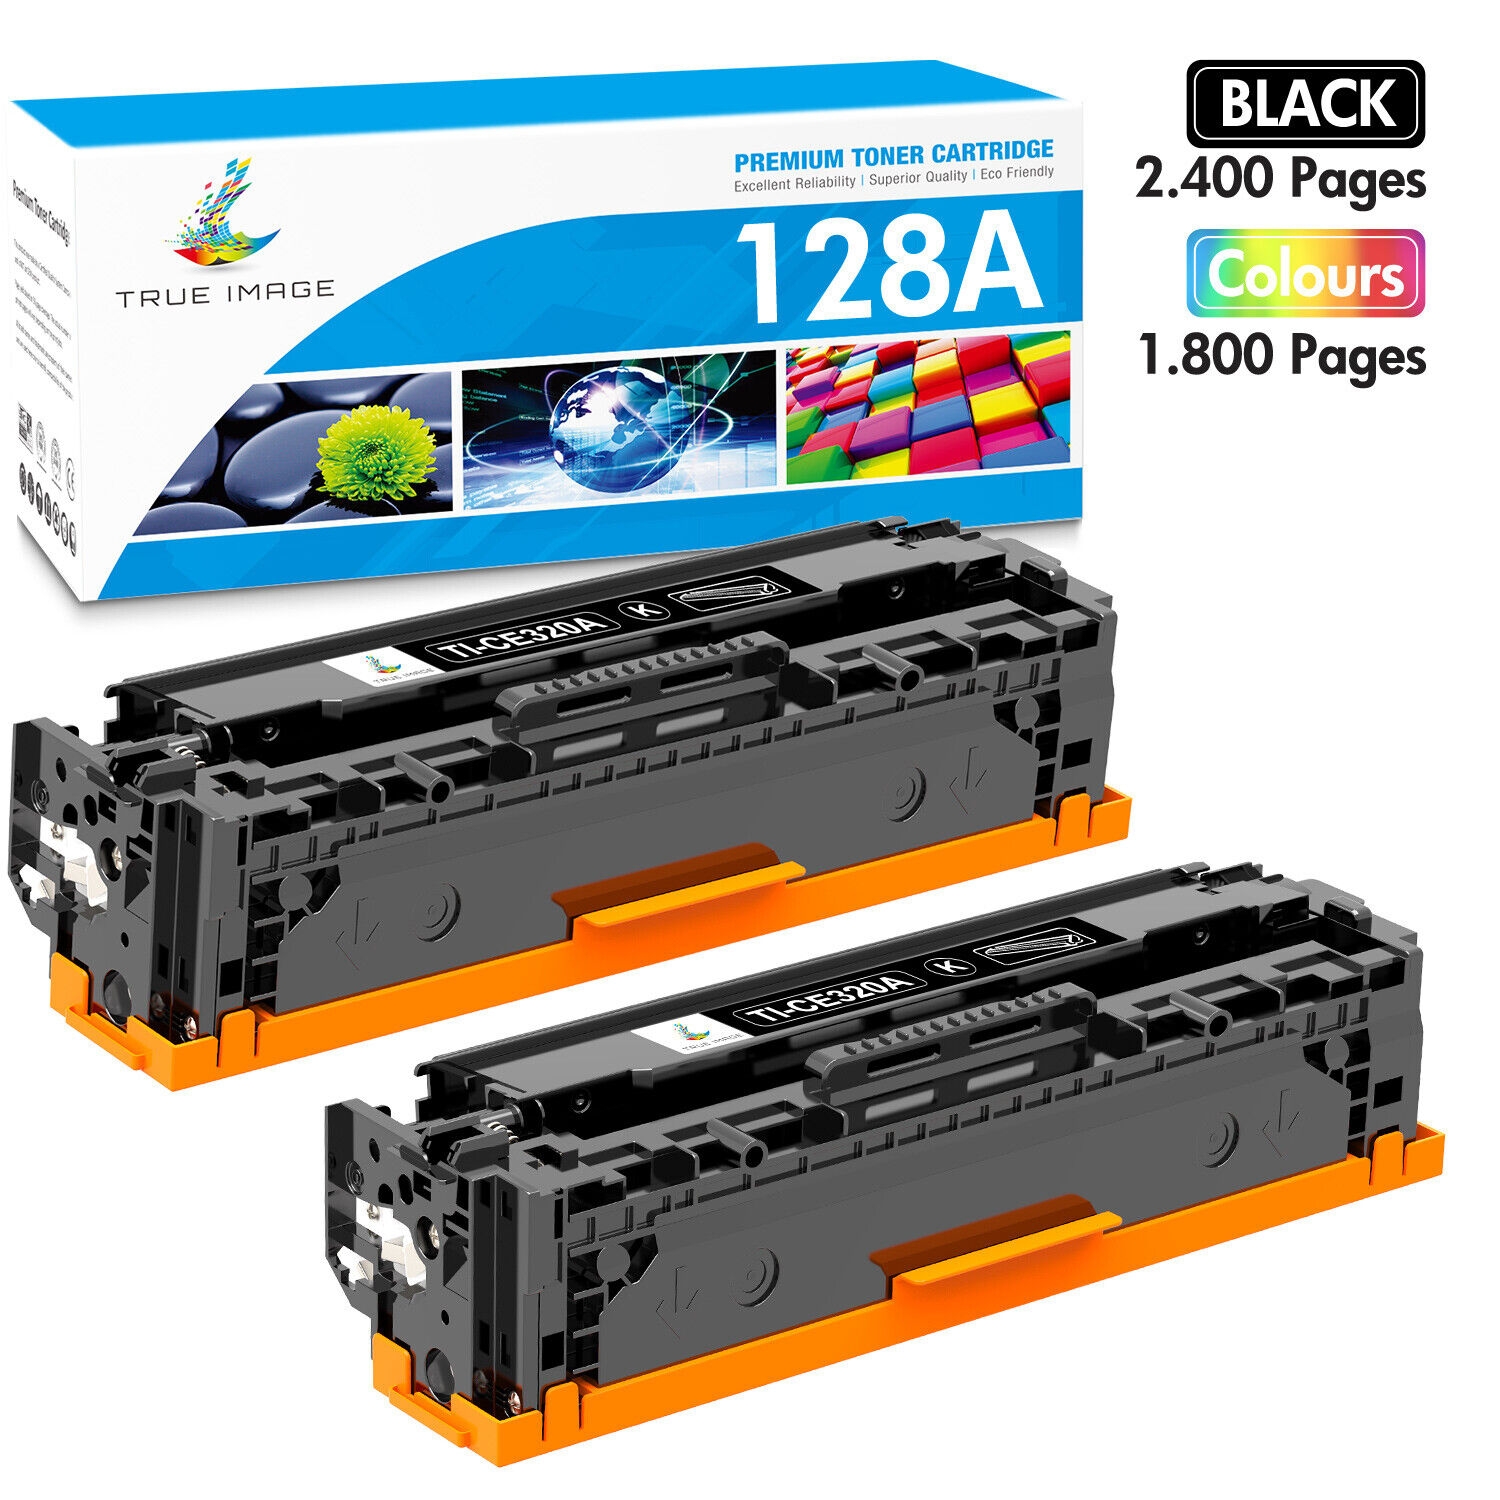 2PK Black CE320A 128A Toner For HP Color LaserJet Pro CM1415fnw CP1525nw CP1525